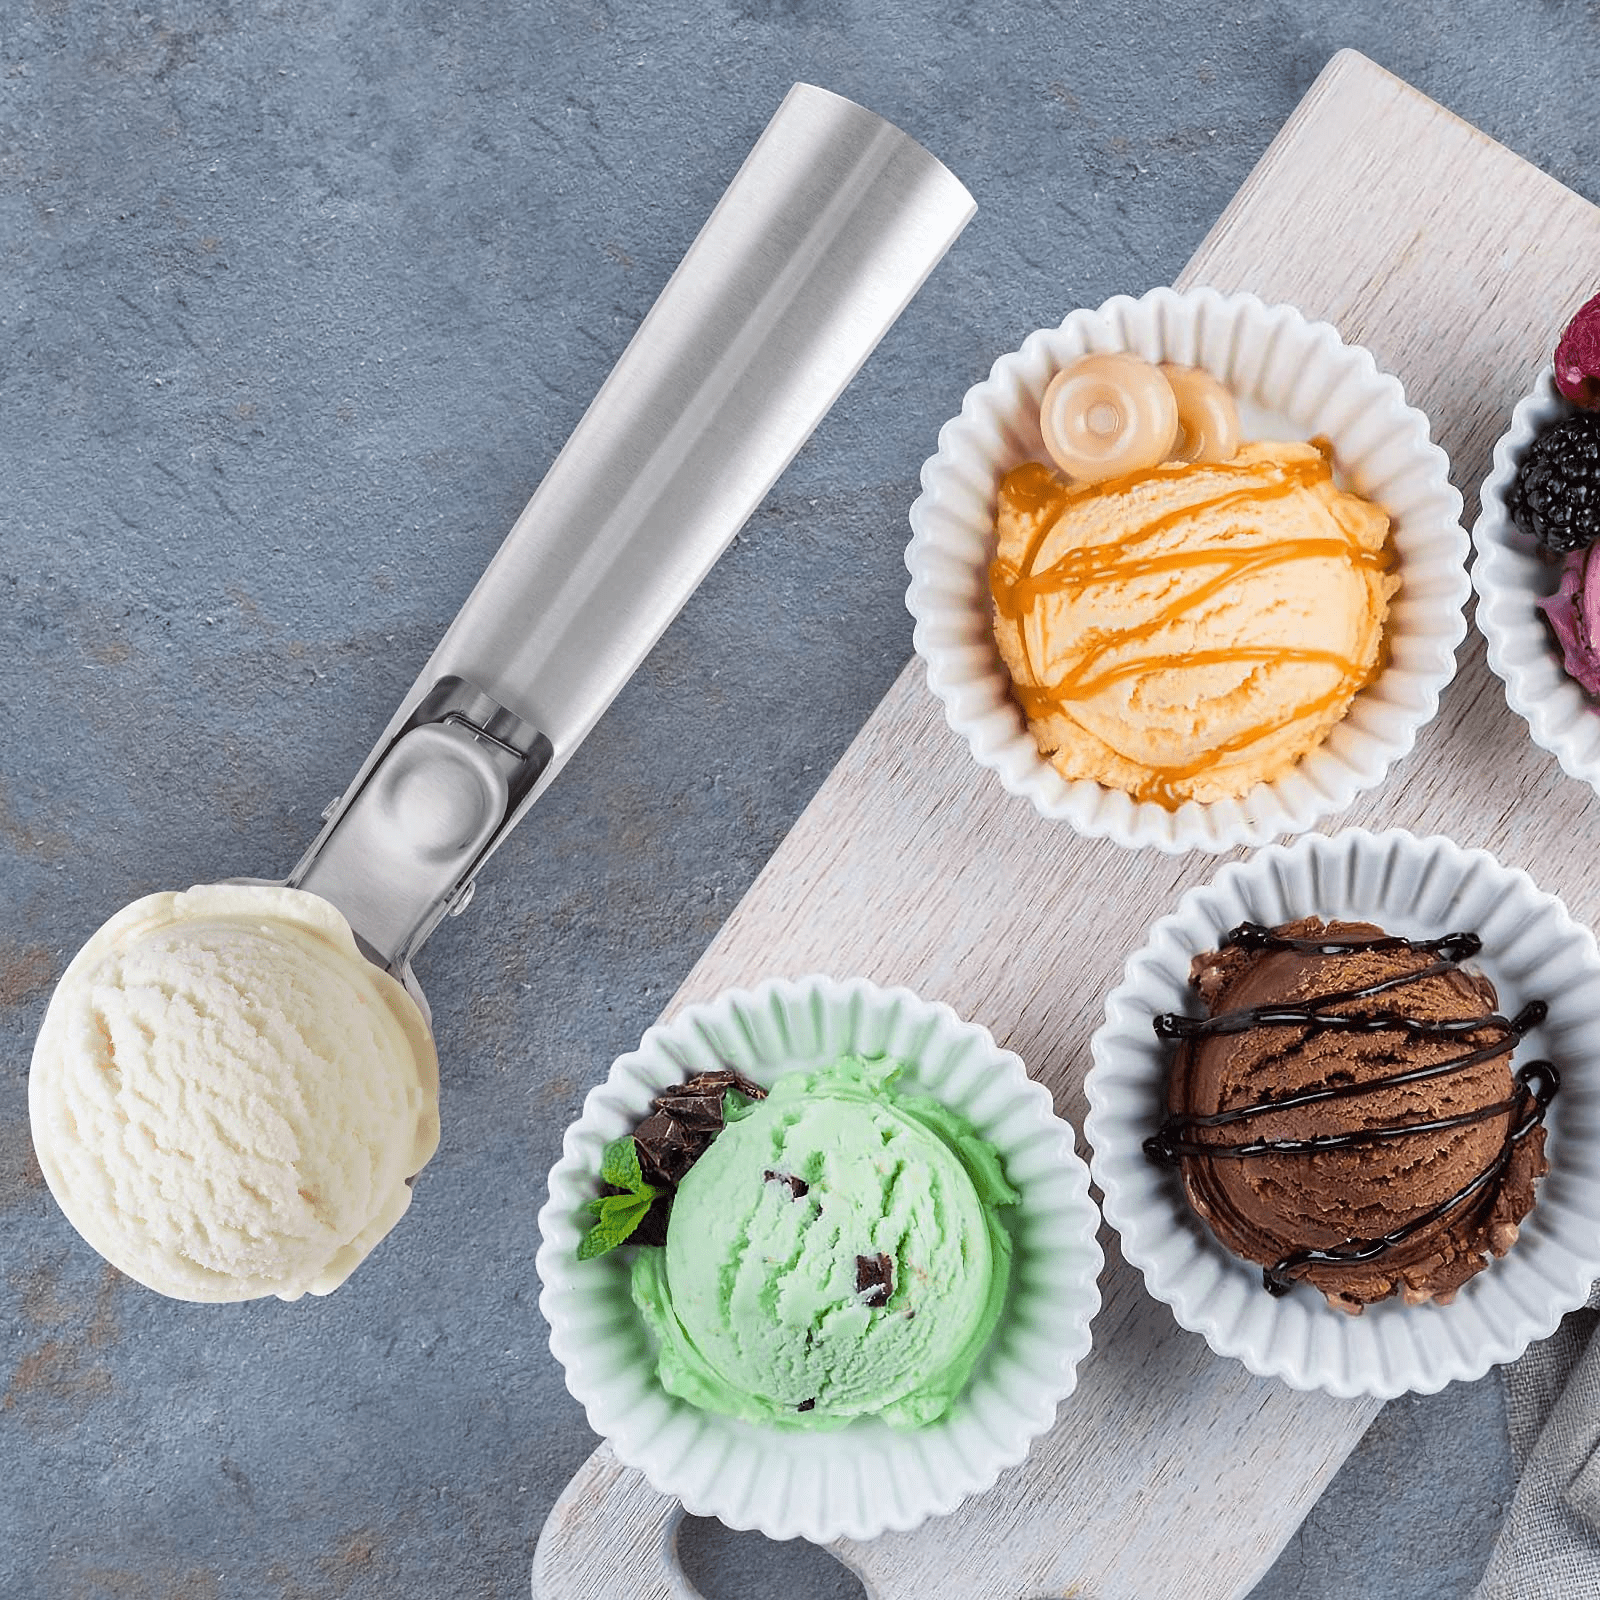 BlauKe Stainless Steel Ice Cream Scoop, Professional Ice Cream Scooper with Comfortable Non-Slip Rubber Grip